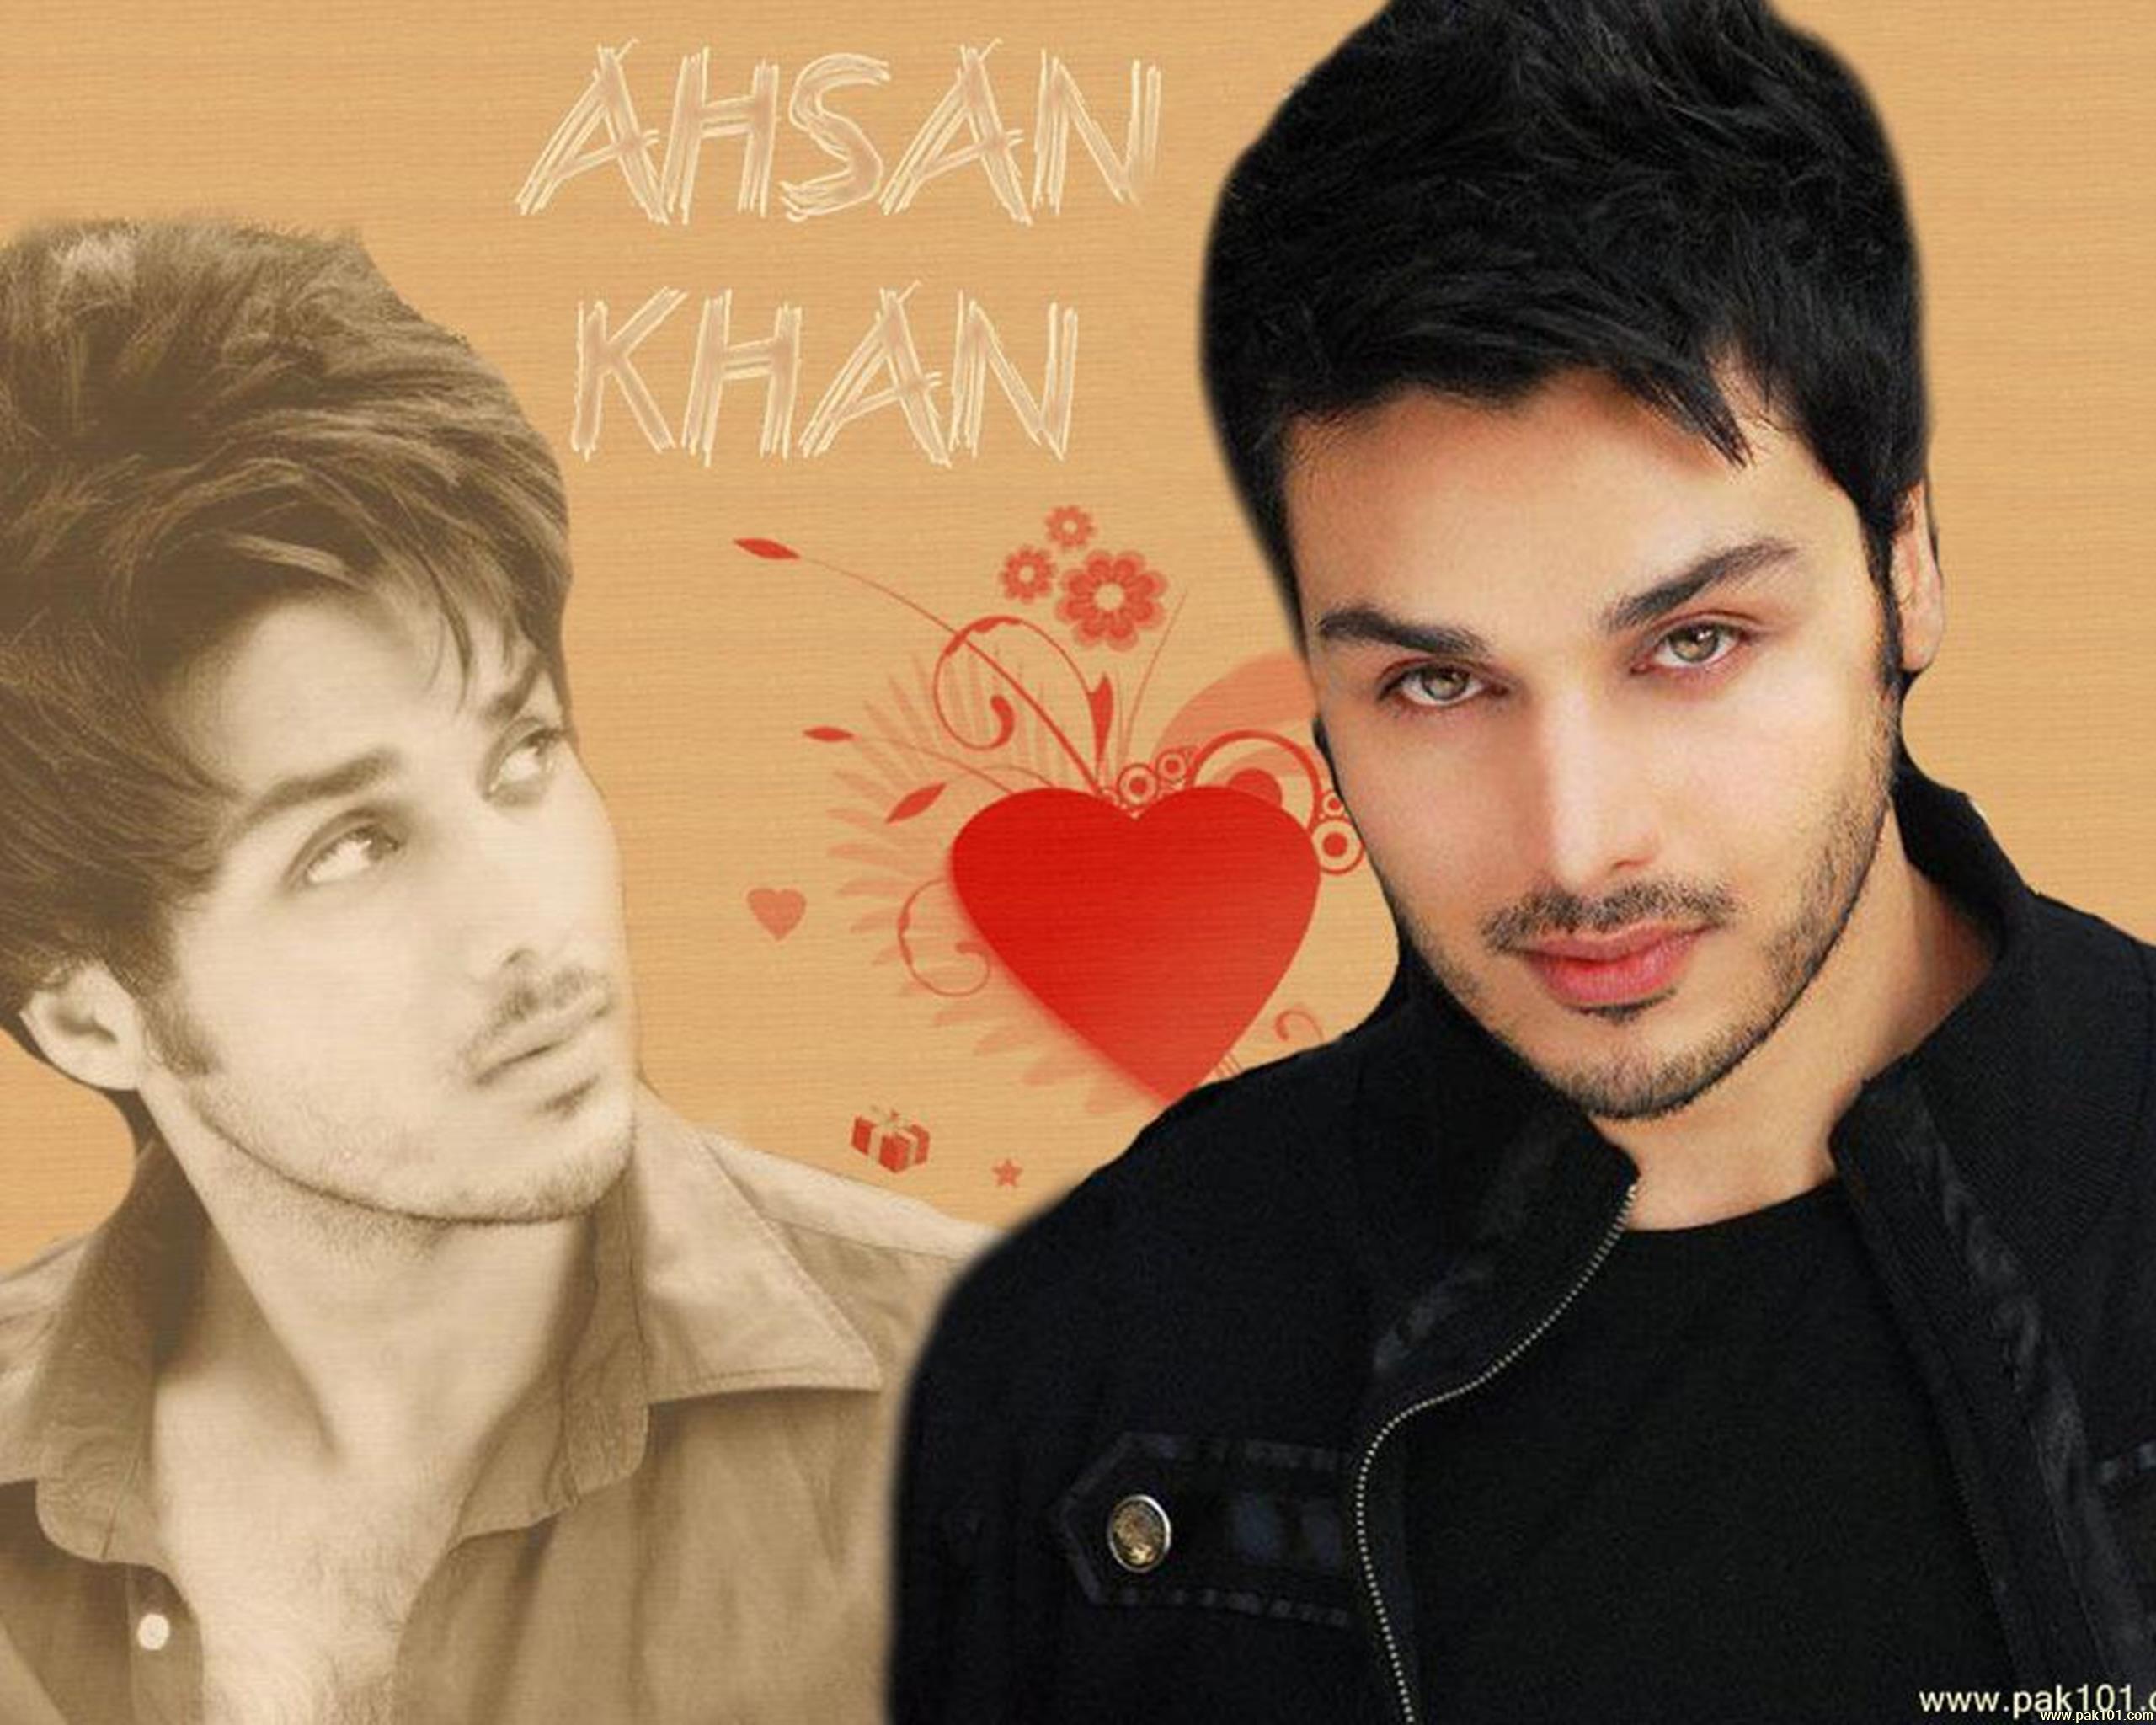 Wallpaper > Actors (TV) > Ahsan Khan > Ahsan Khan high quality